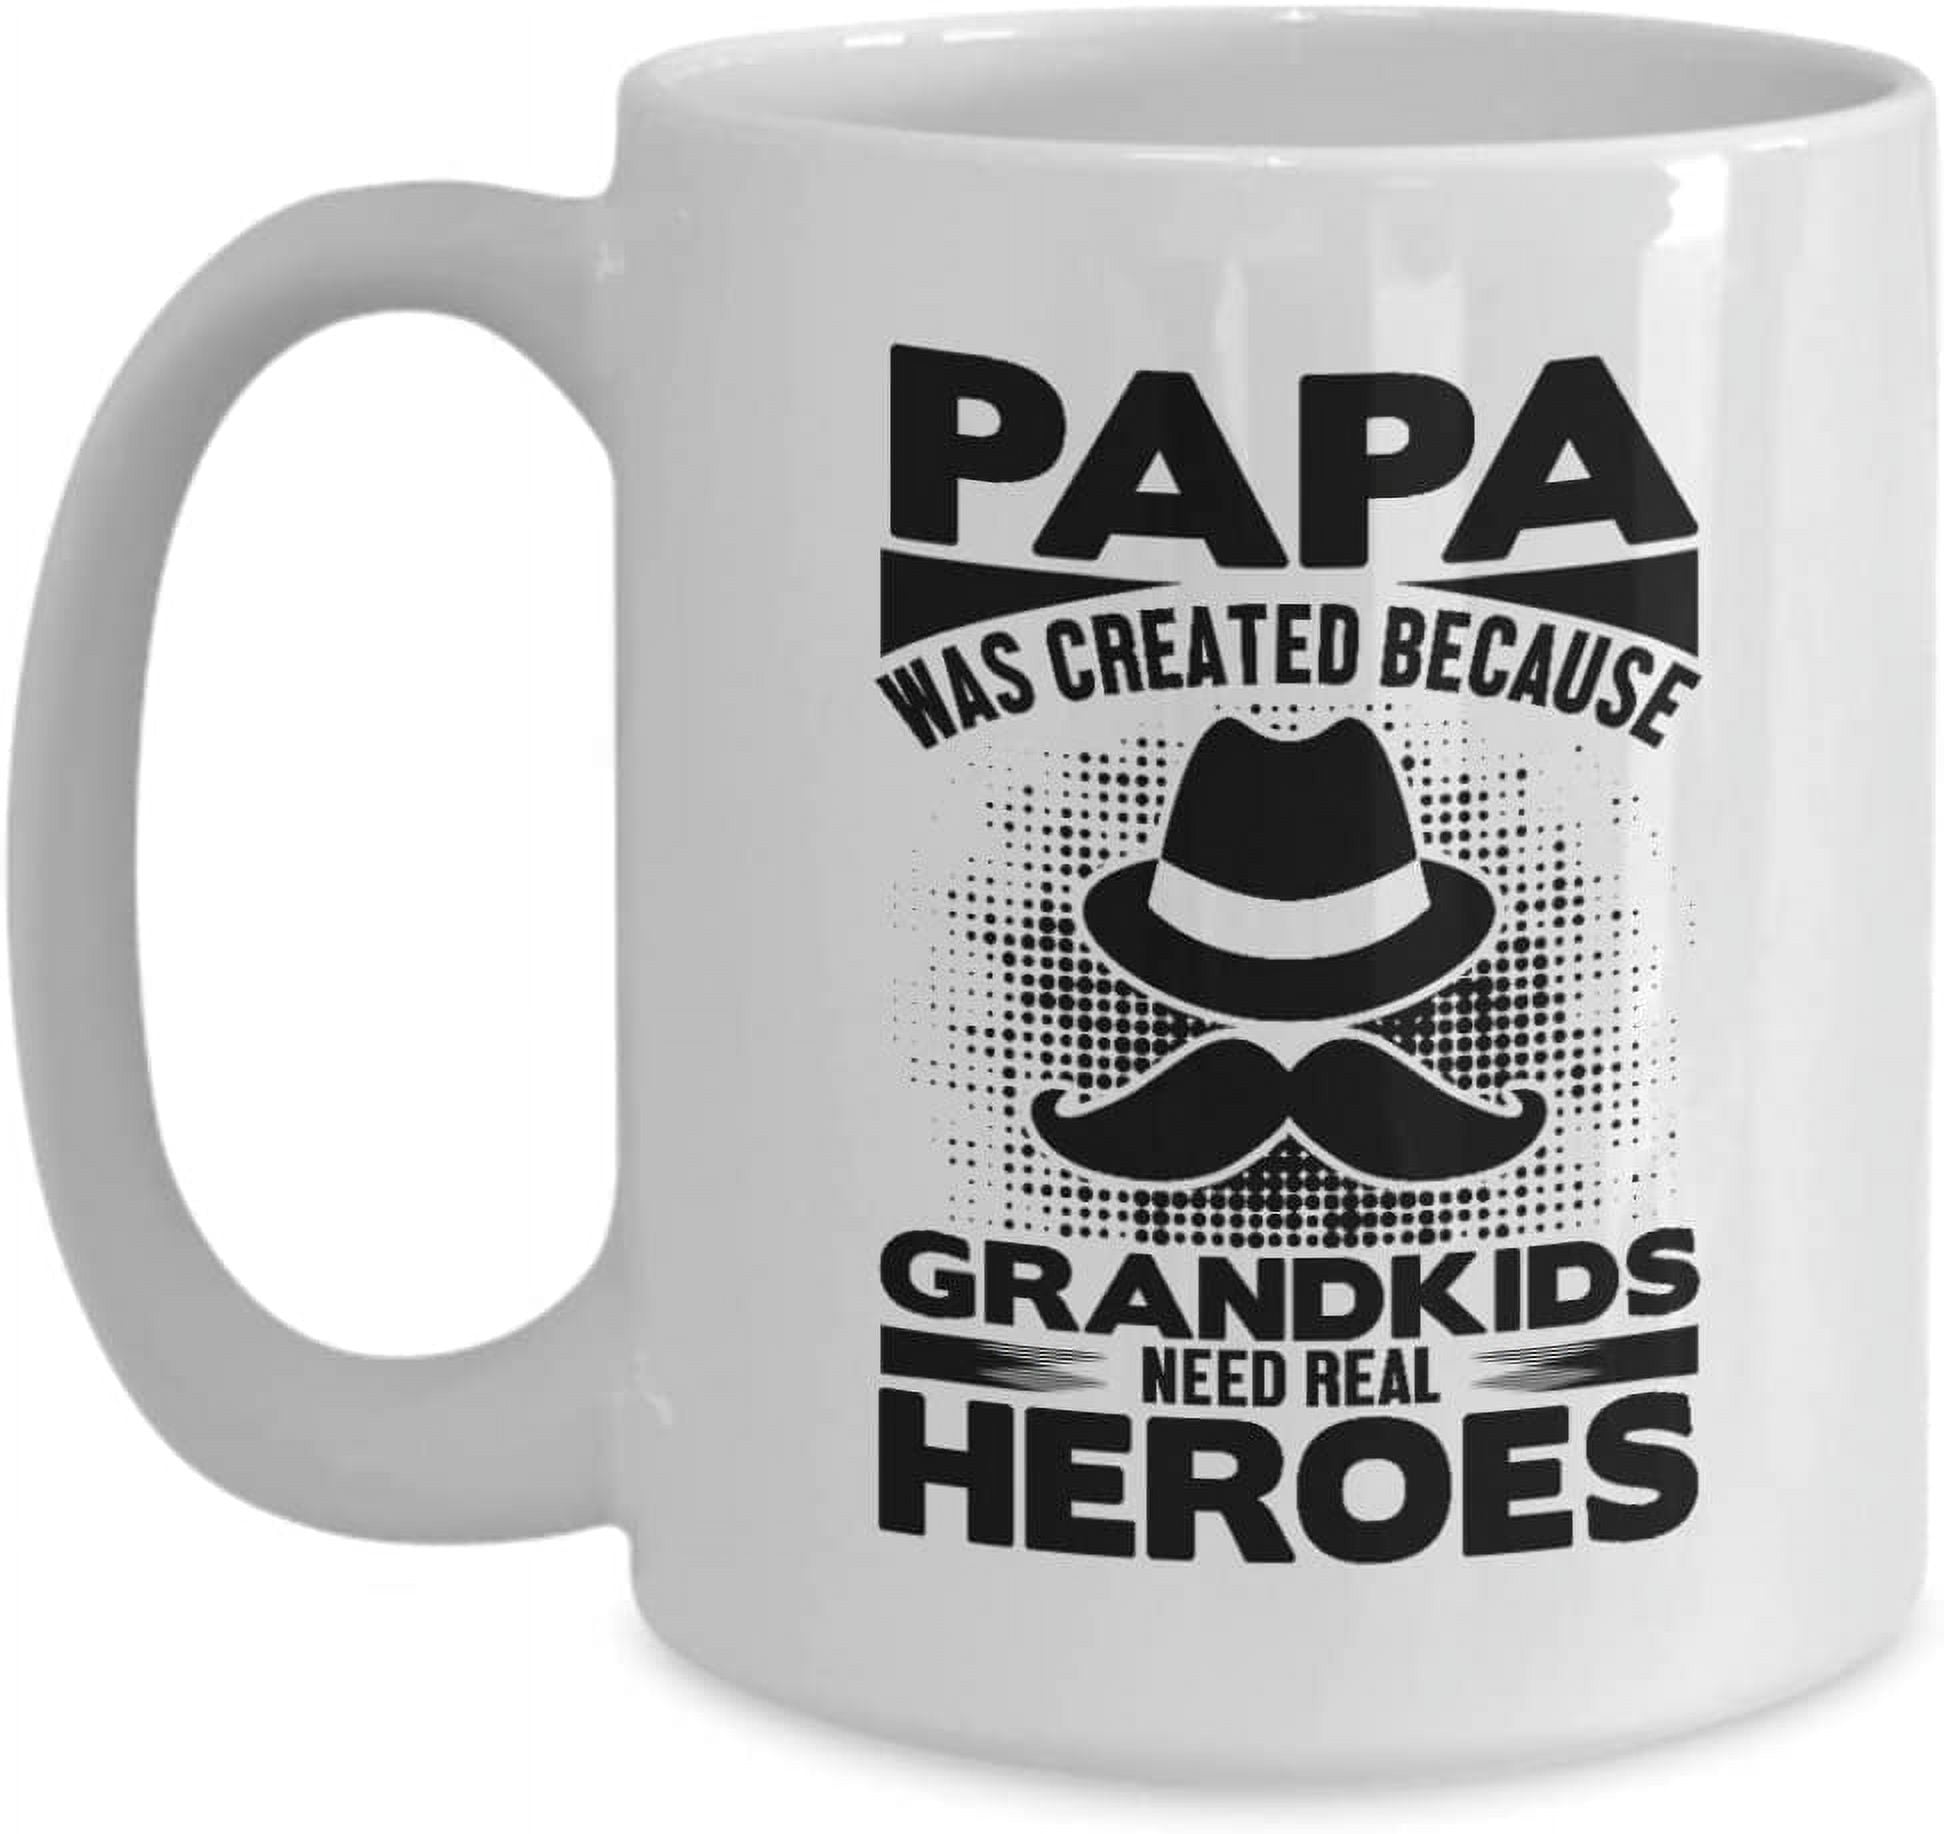 So God Made A Grandpa Mug - Her View From Home